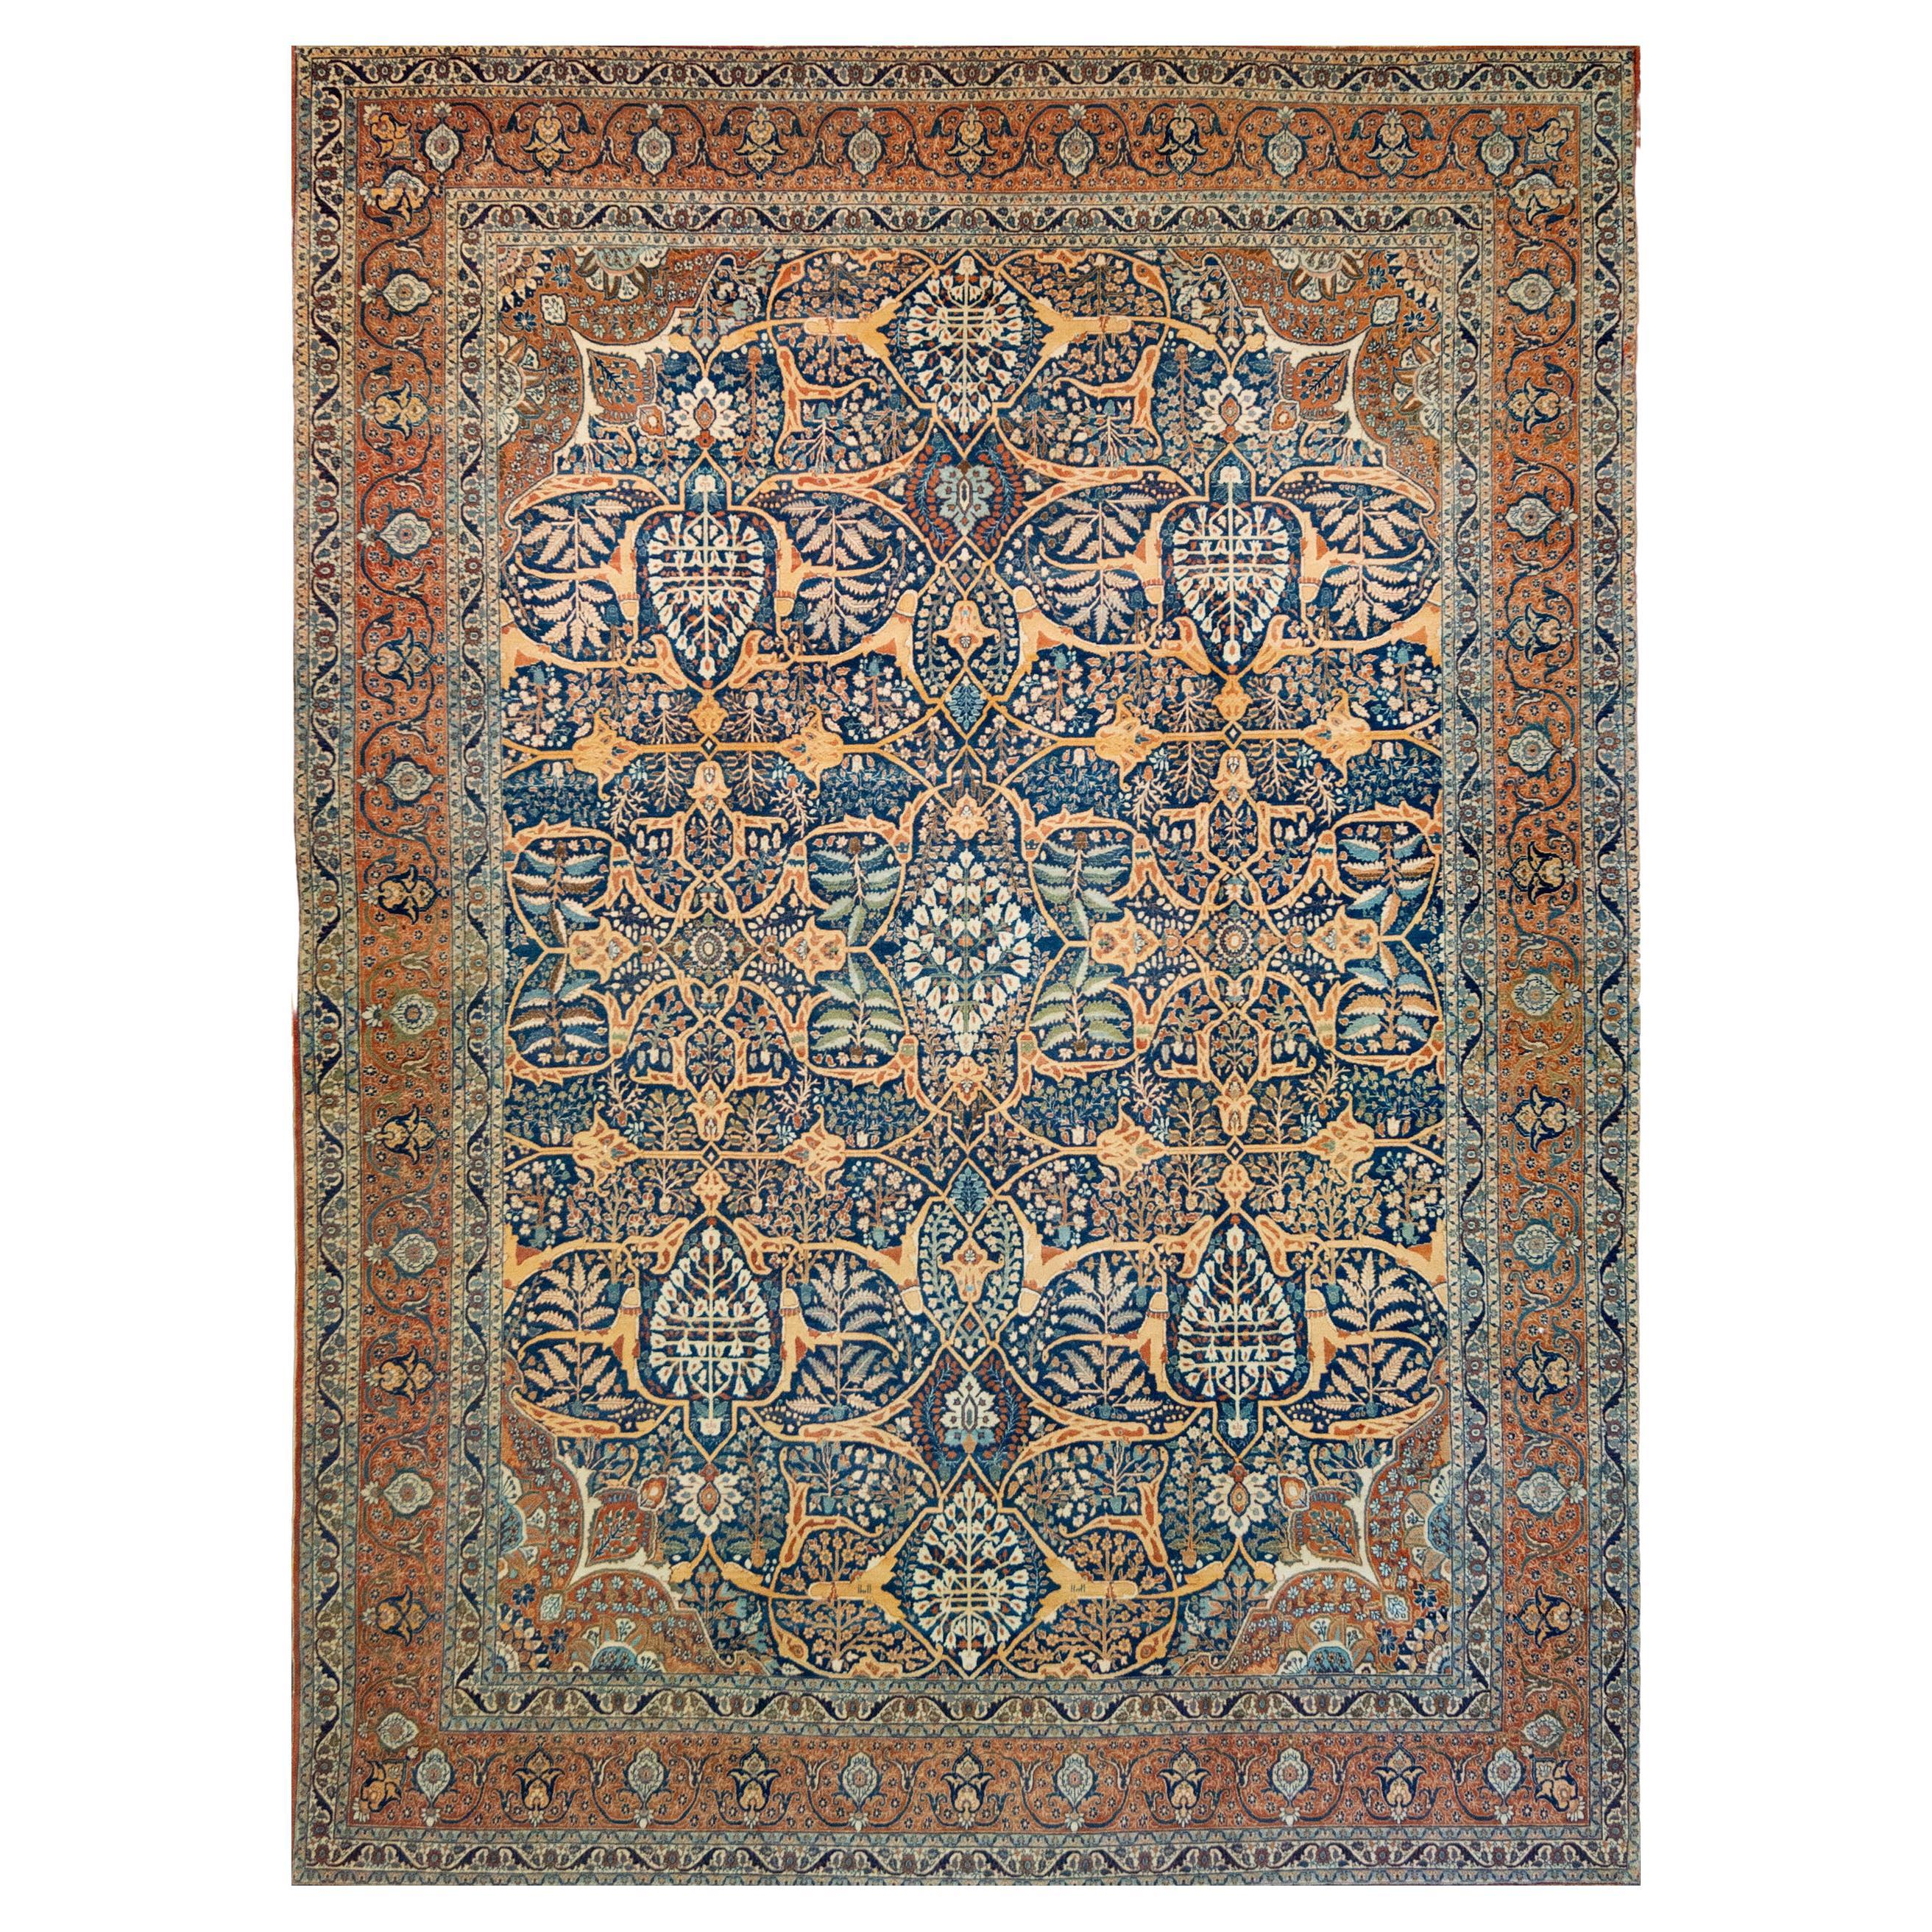 Late 19th Century Antique Hadji Jallili Persian Rug